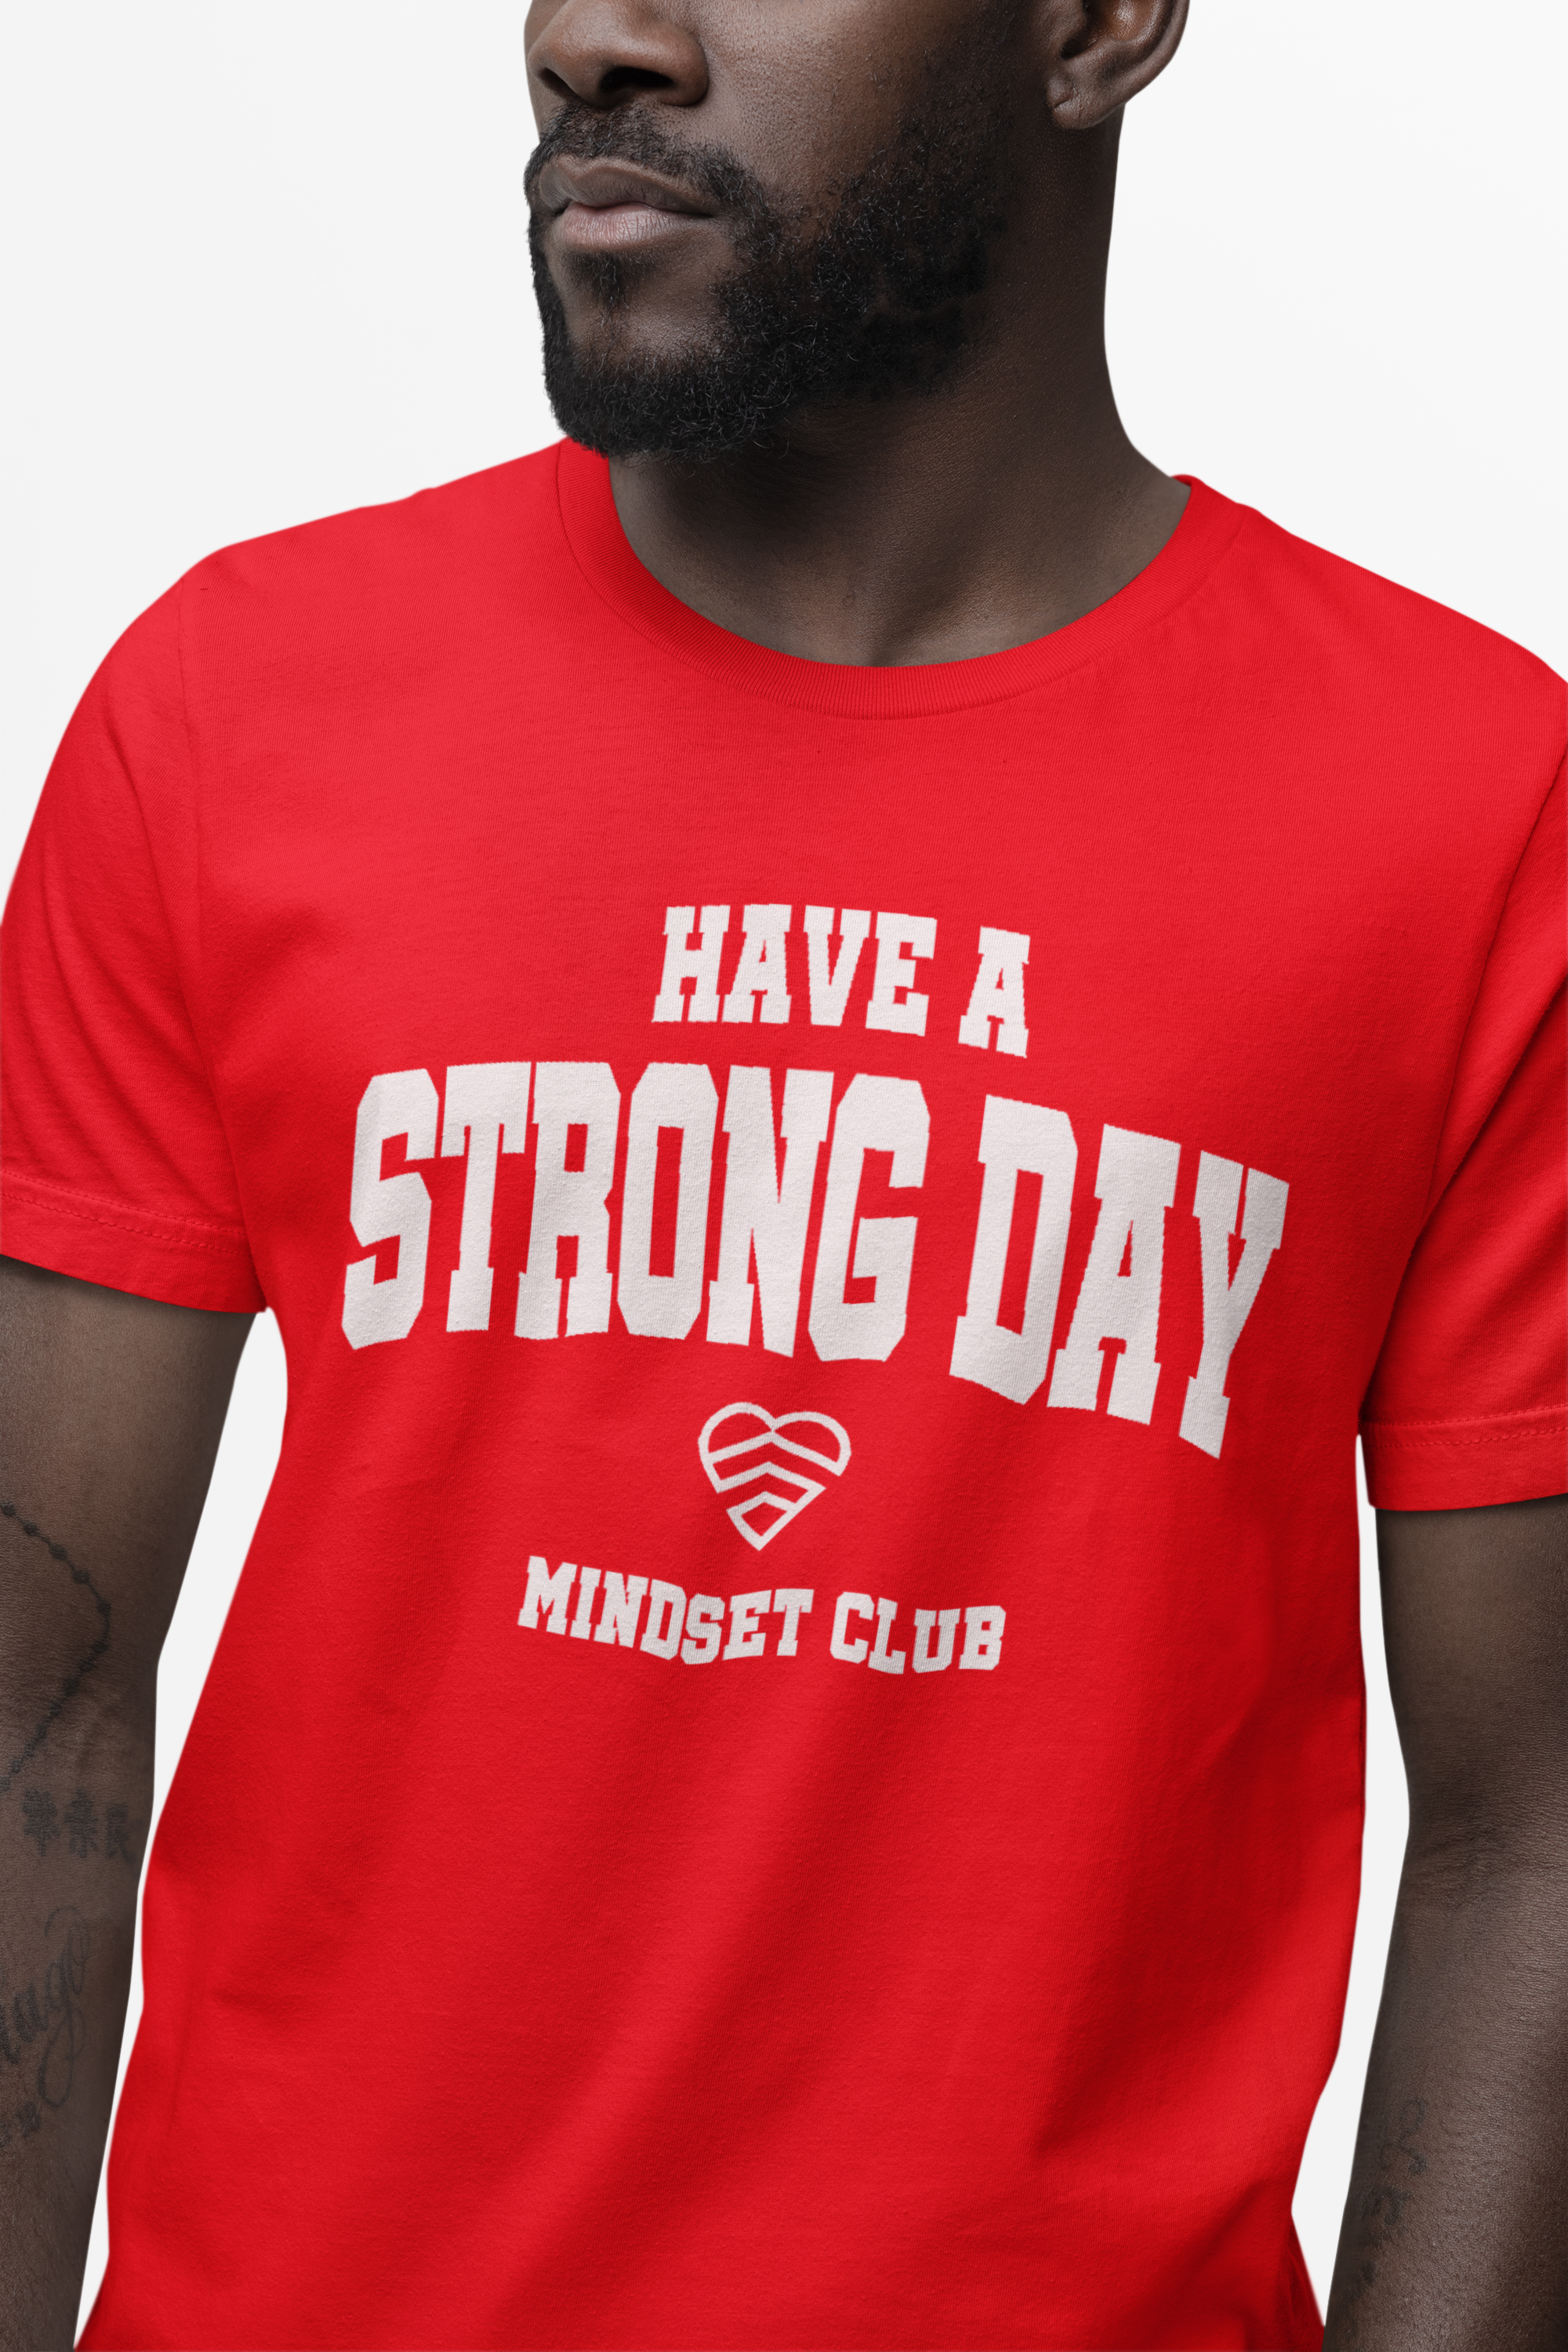 Mindset Club Statement Shirt - Red